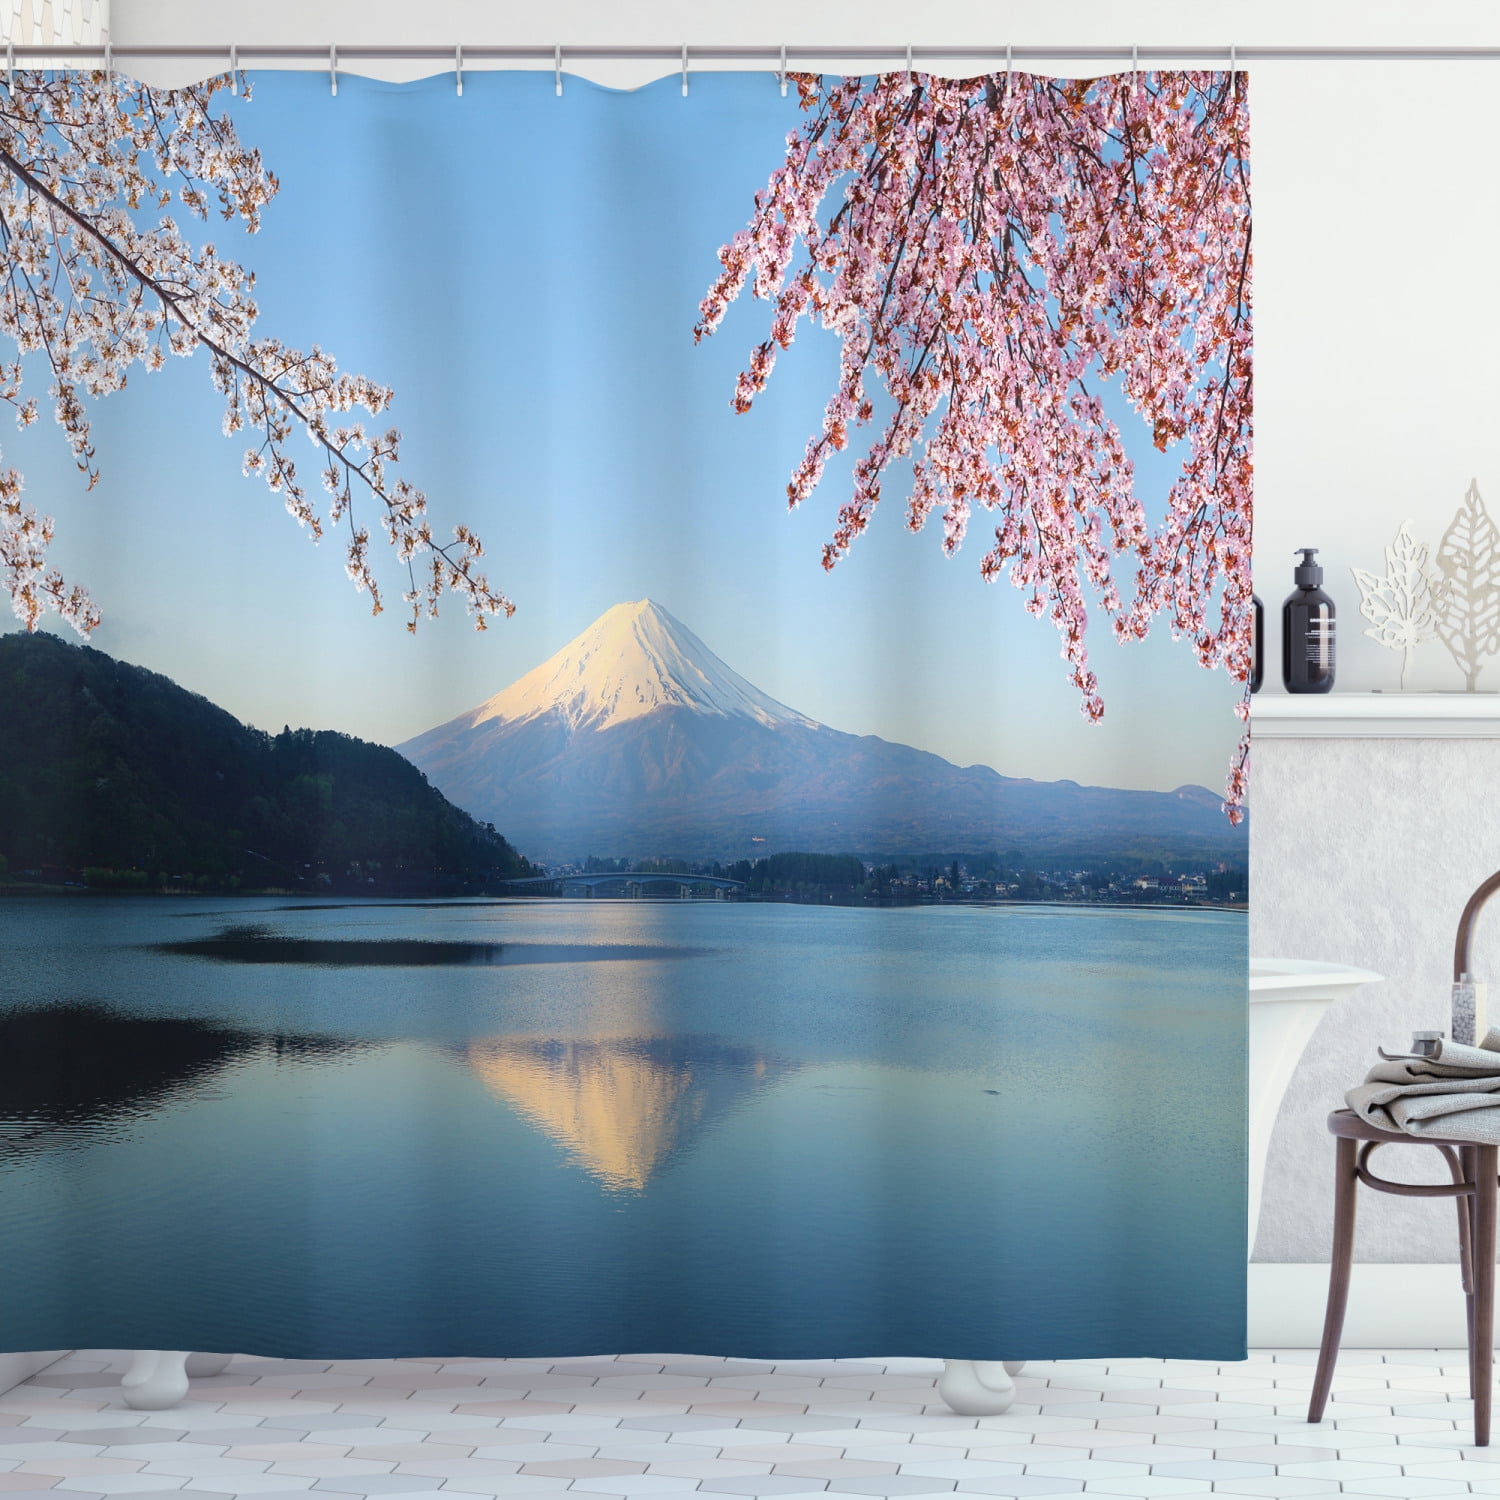 Japan Mount Fuji Cherry Shower Curtain Liner Polyester Fabric Bathroom Mat Set 